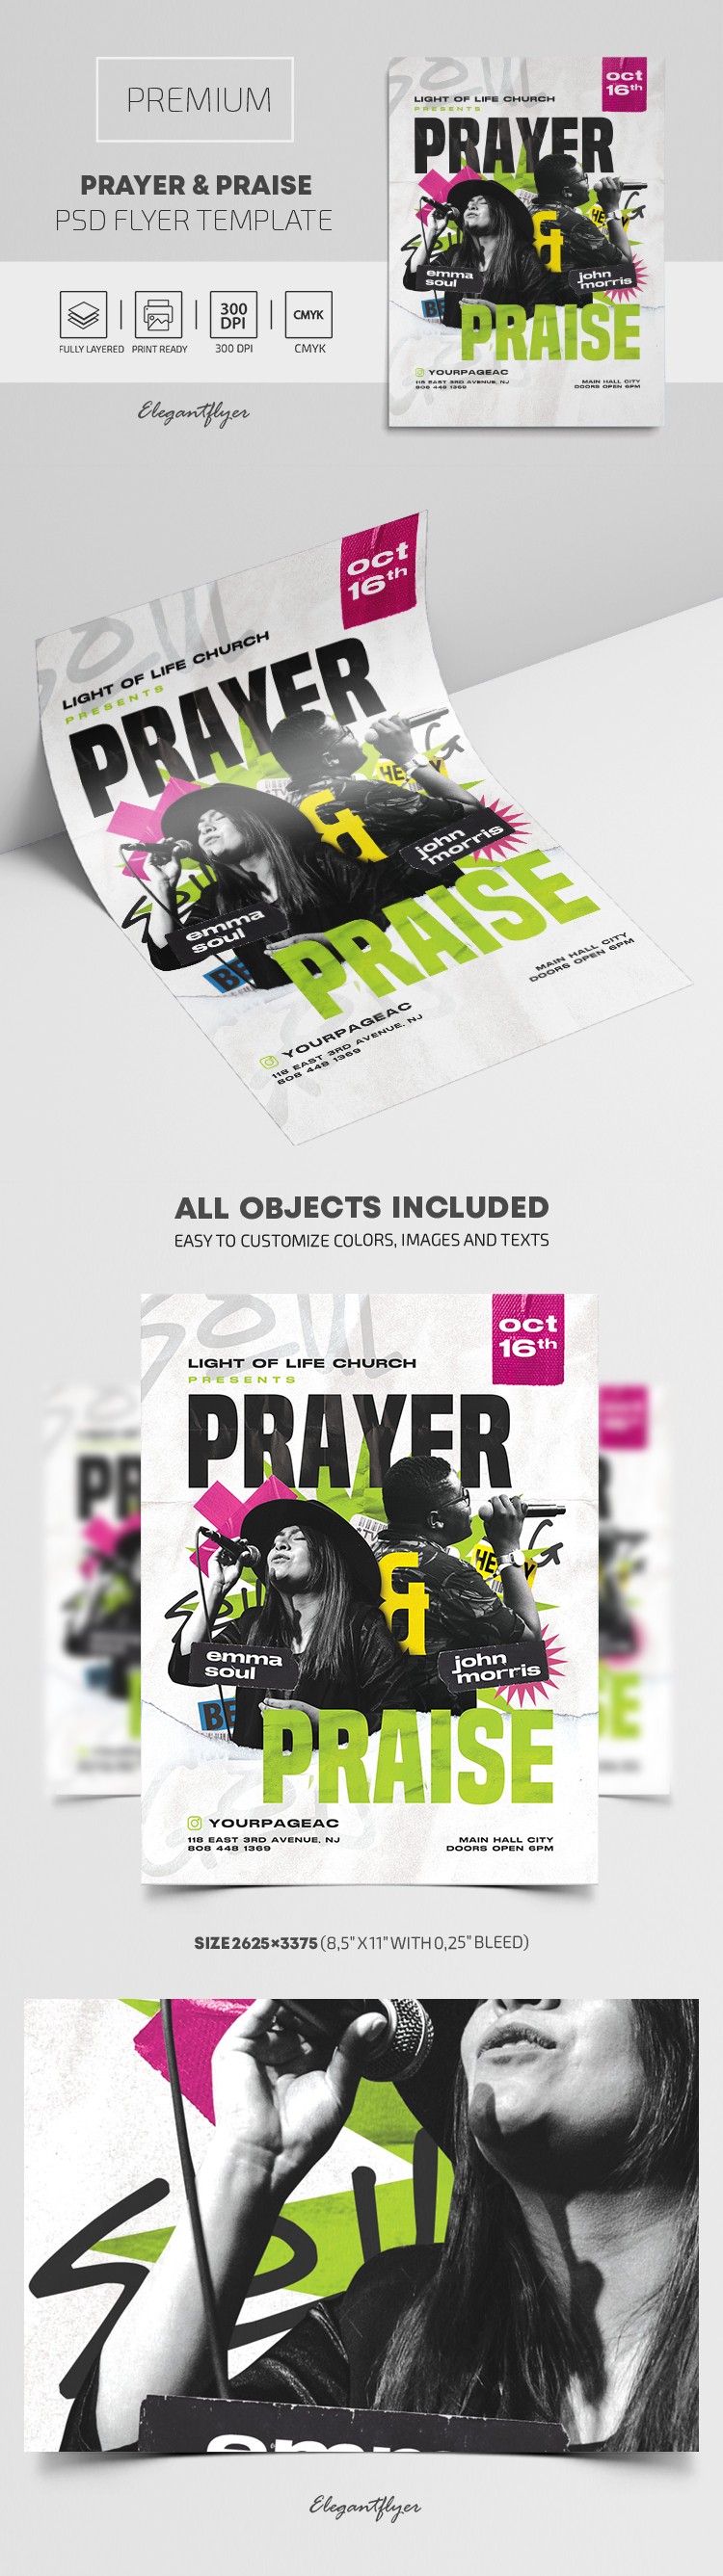 Prayer and Praise Flyer by ElegantFlyer